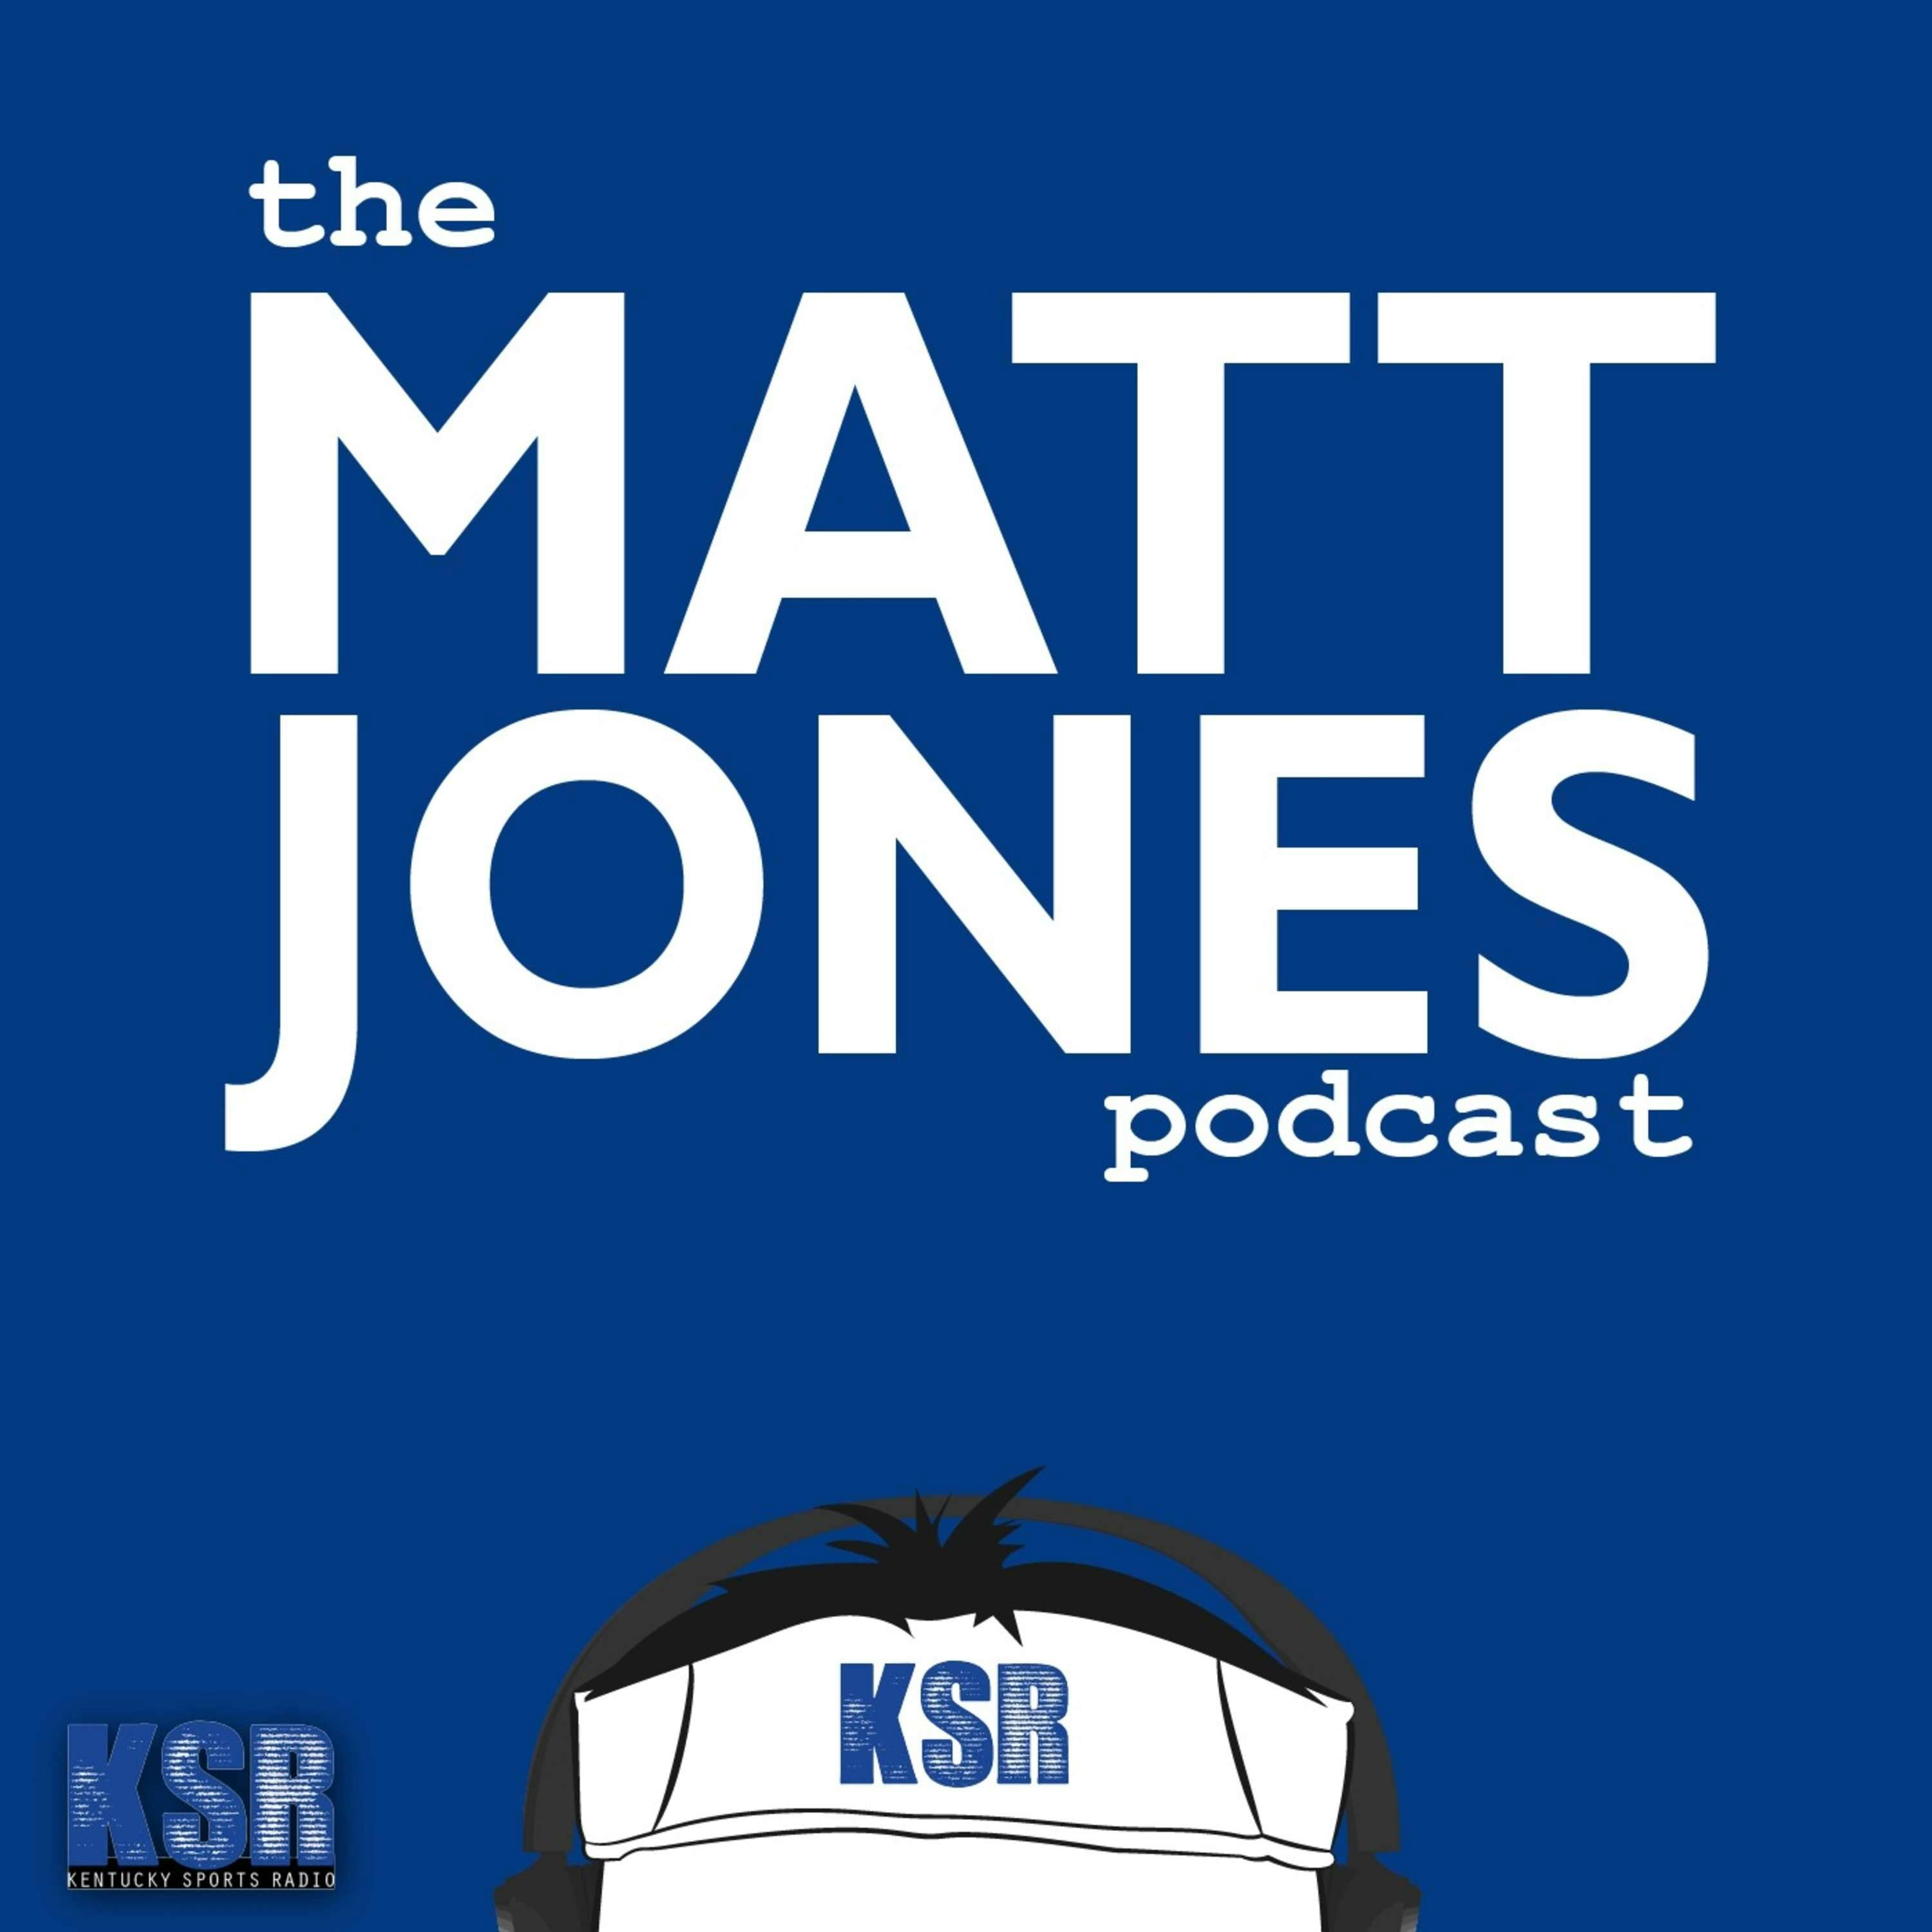 The Matt Jones Podcast: E55 Ian Eagle